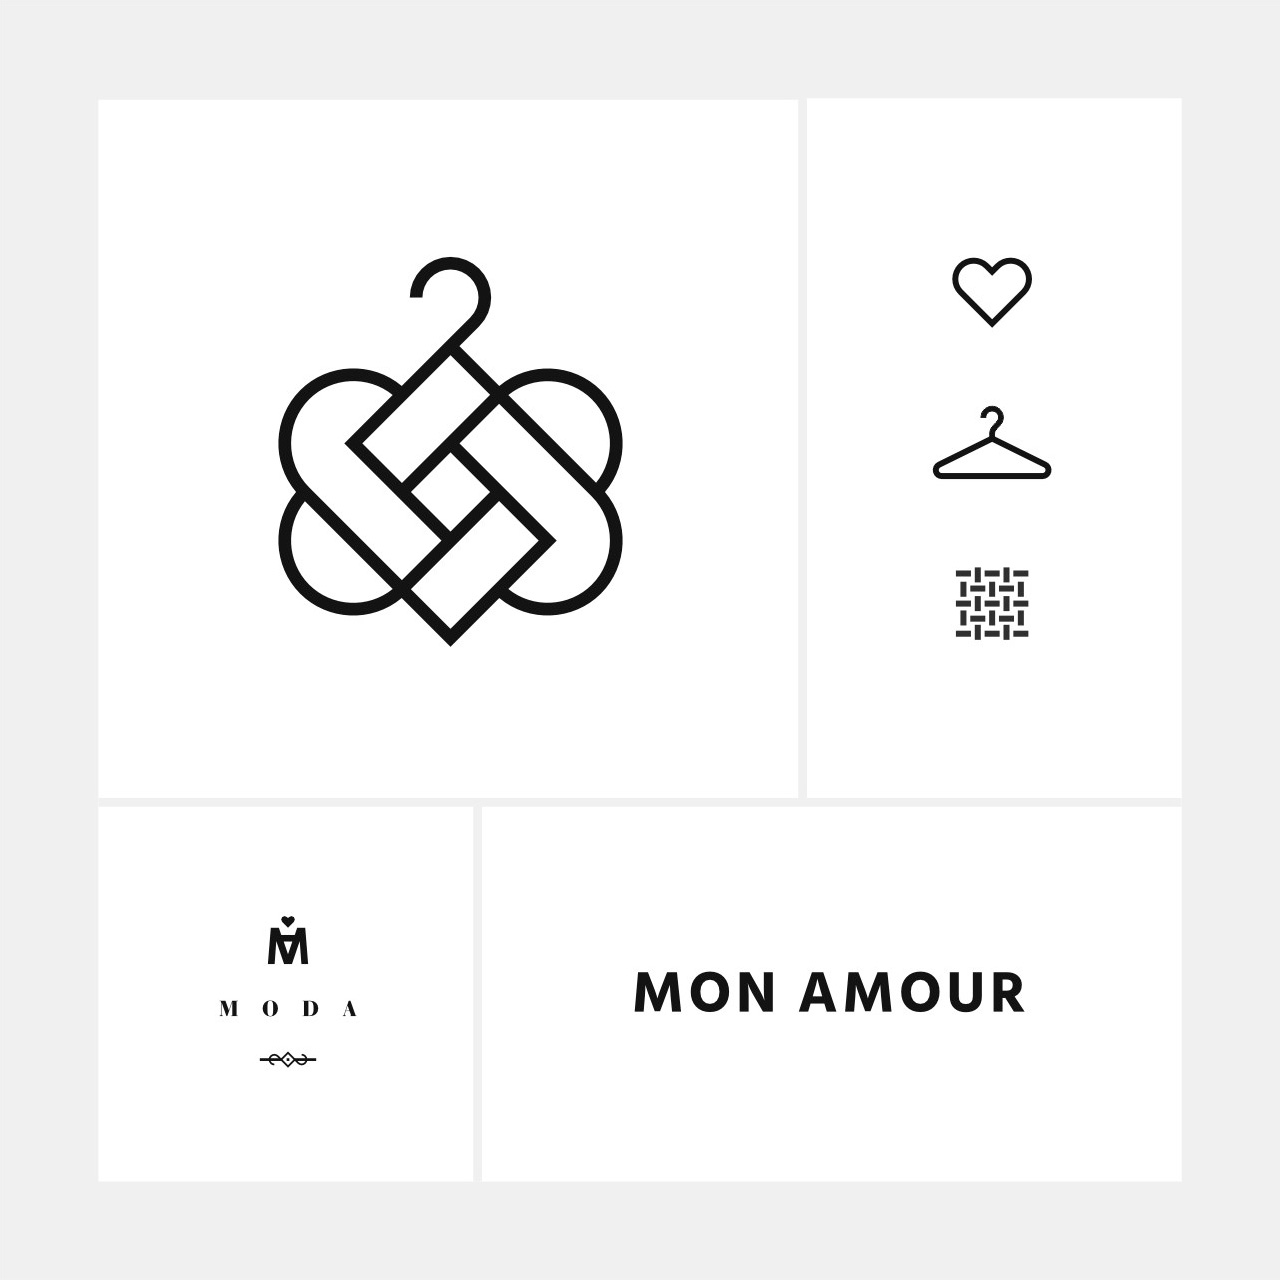 Mon Amour moda identidad corporativa - javier real